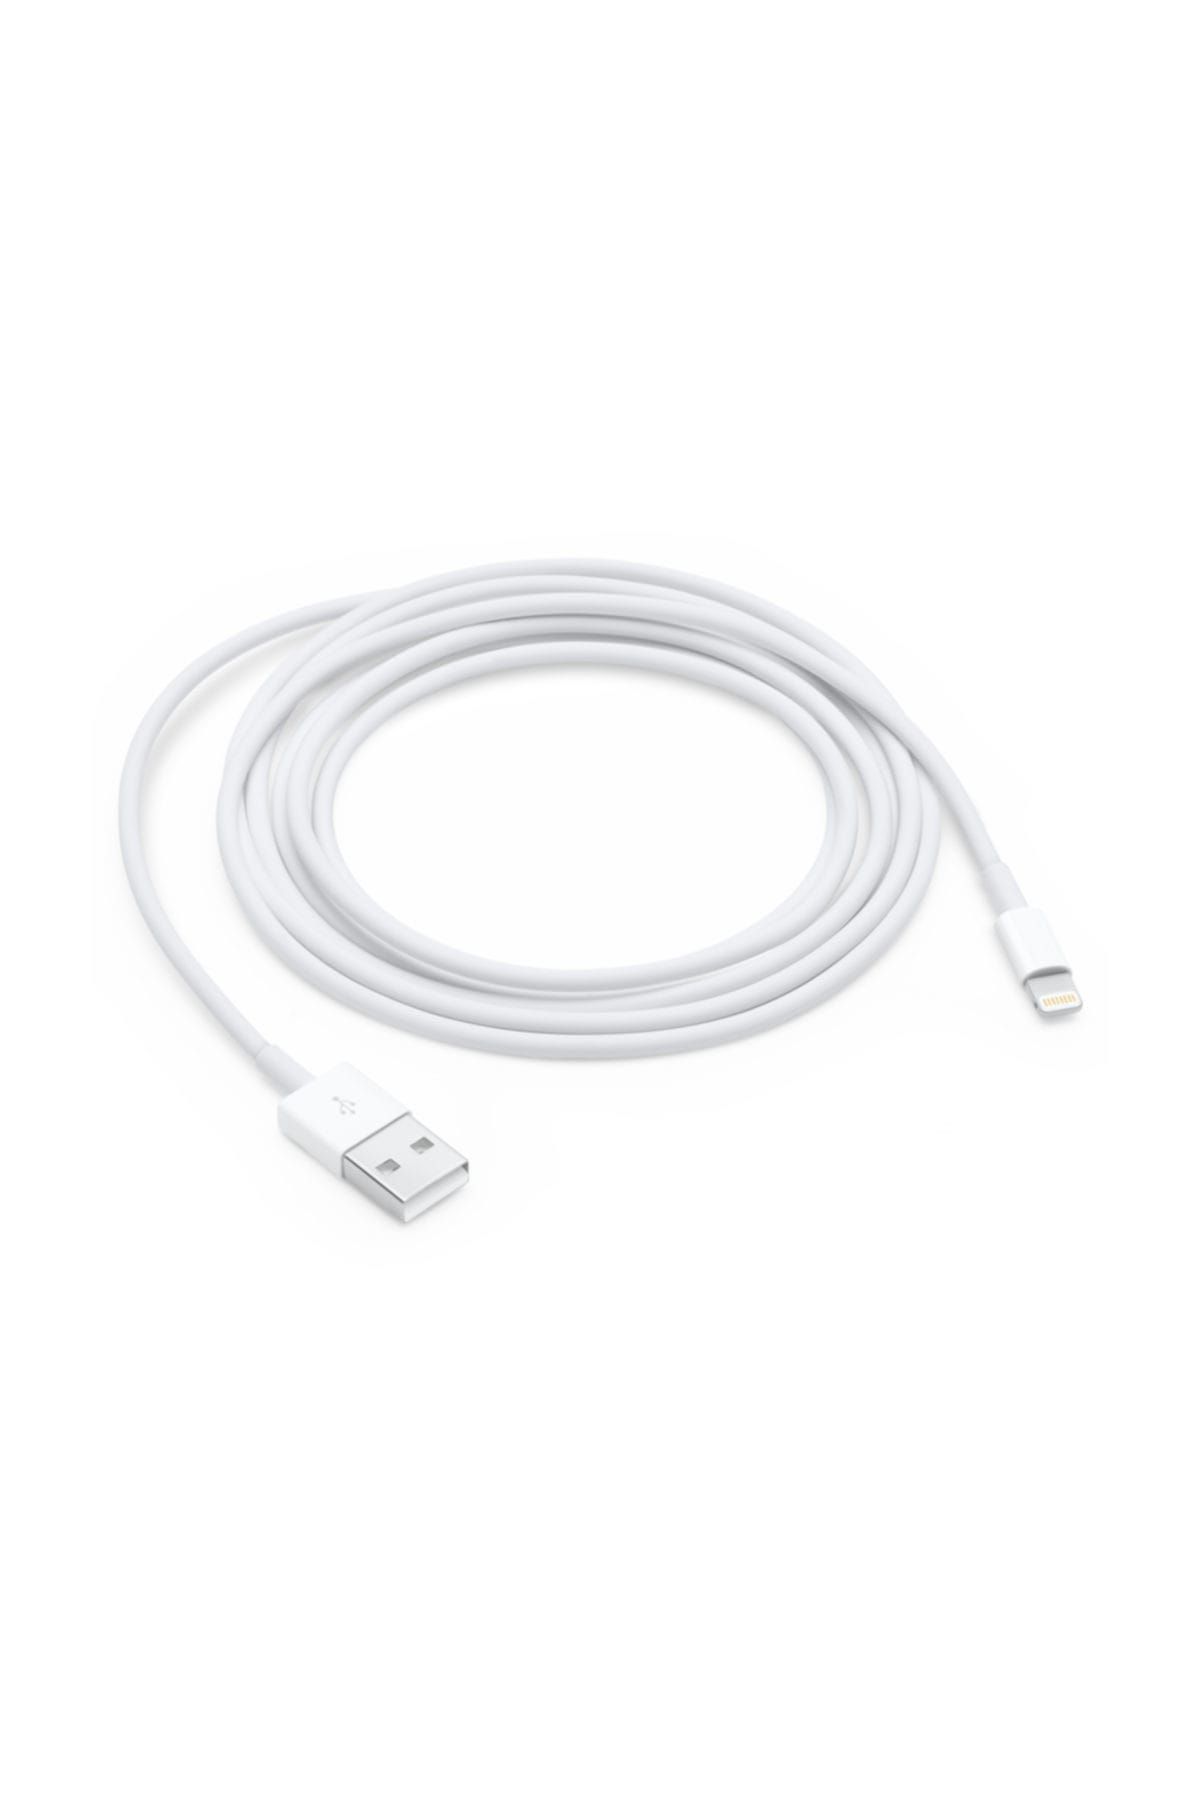 Mcstorey Lightning USB 2.0 Şarj Kablosu iPhone iPad iPod ile Uyumlu